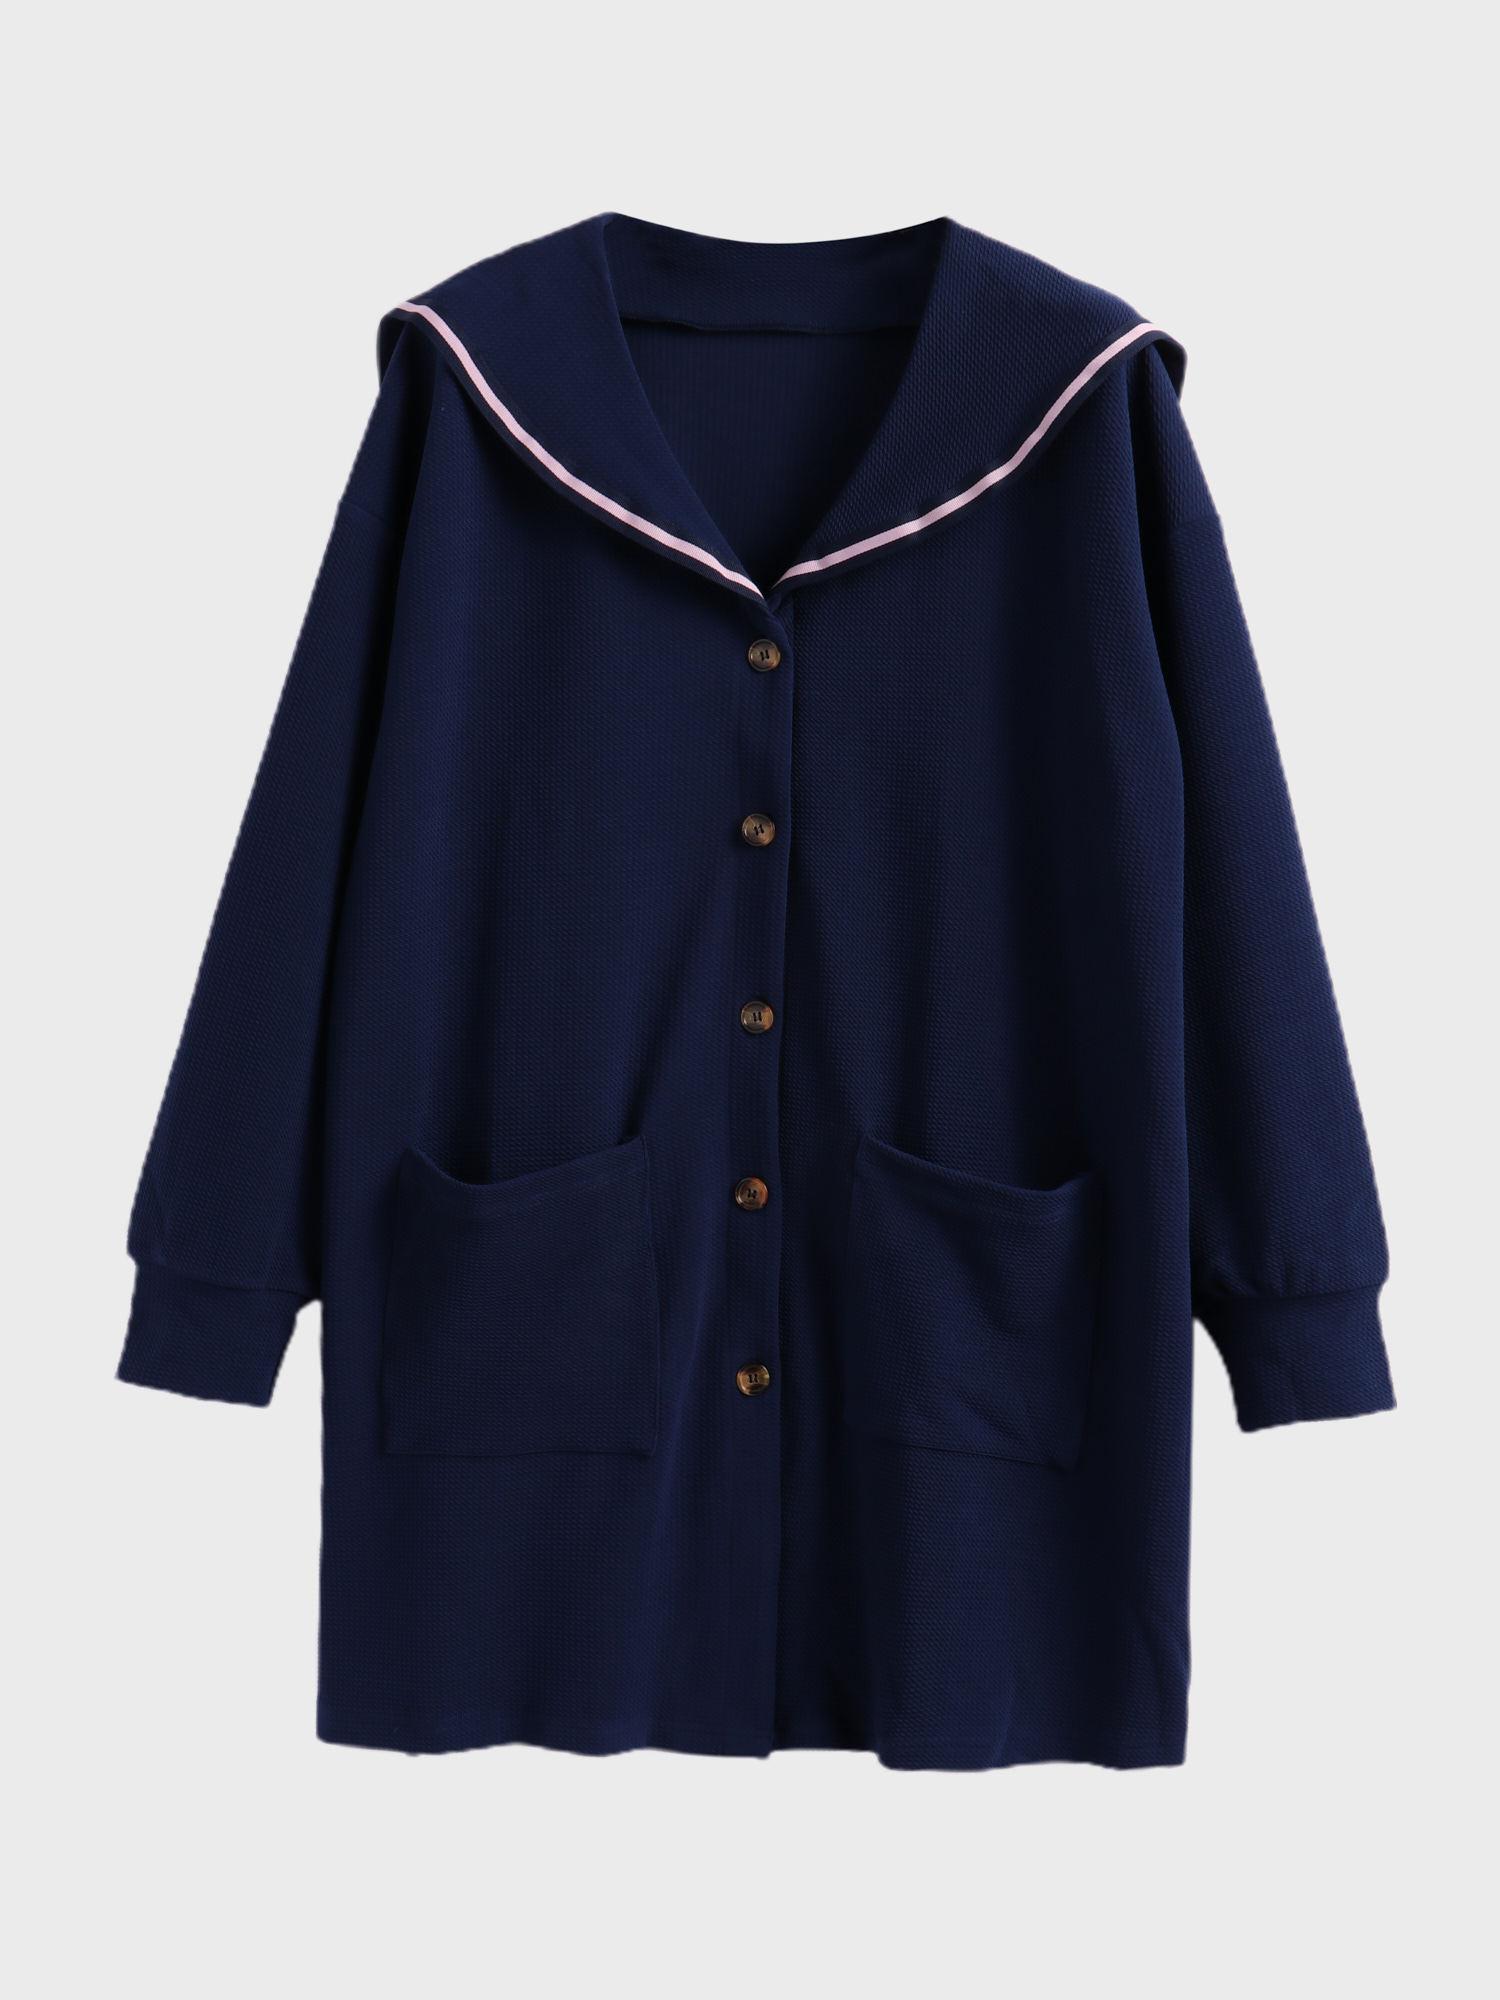 Midsize Navy Style Casual Jacket Dress